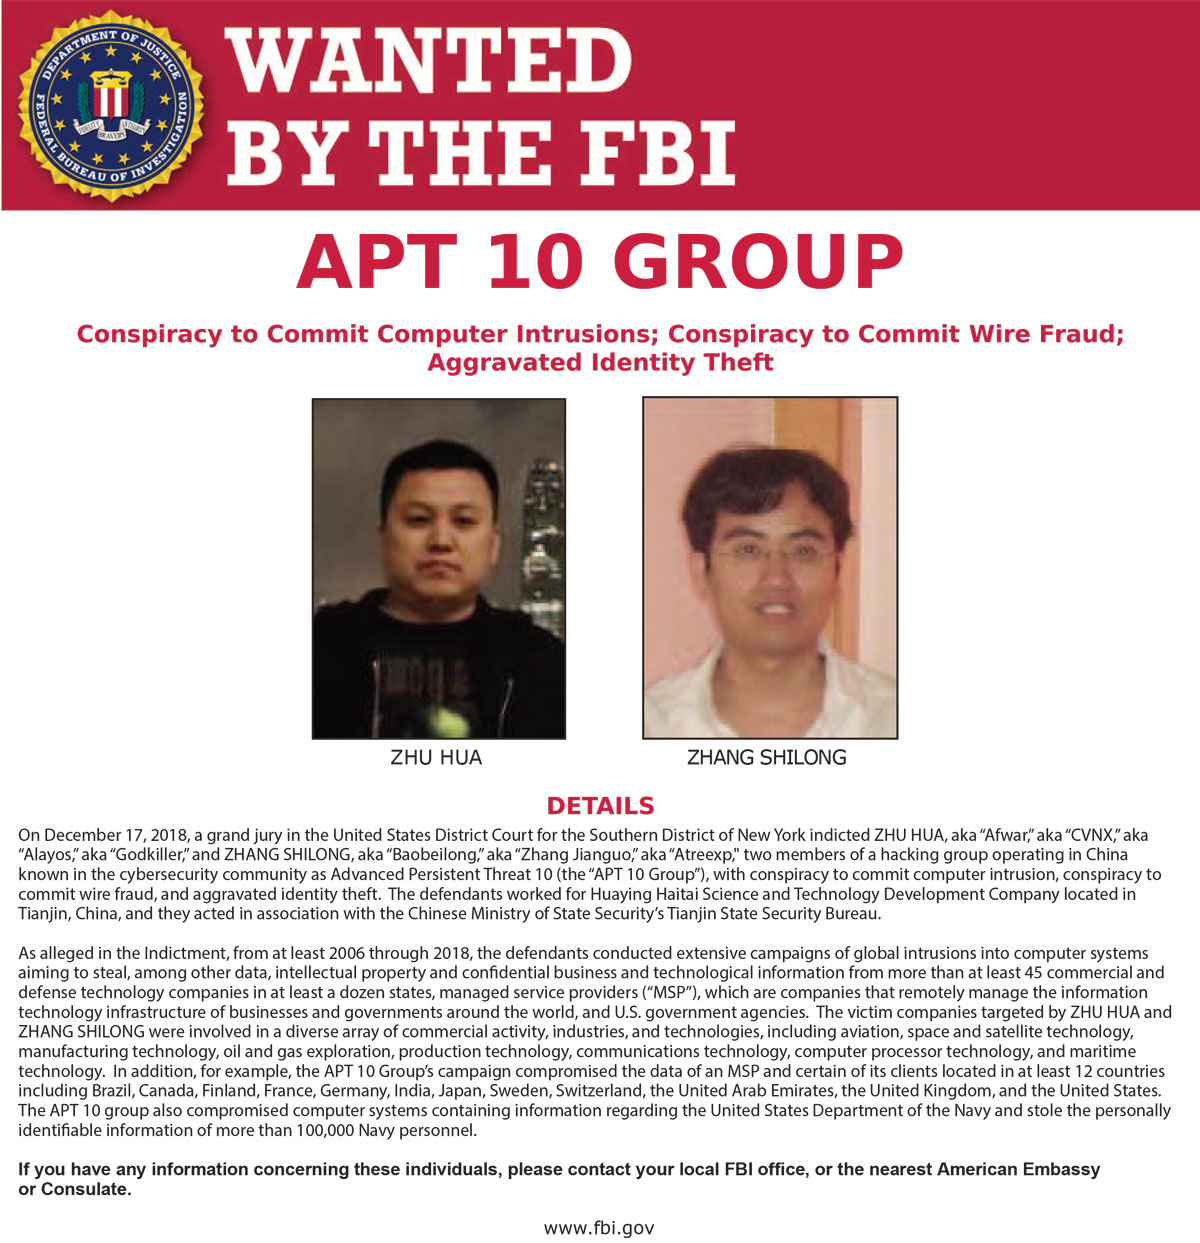 FBI Wanted Post